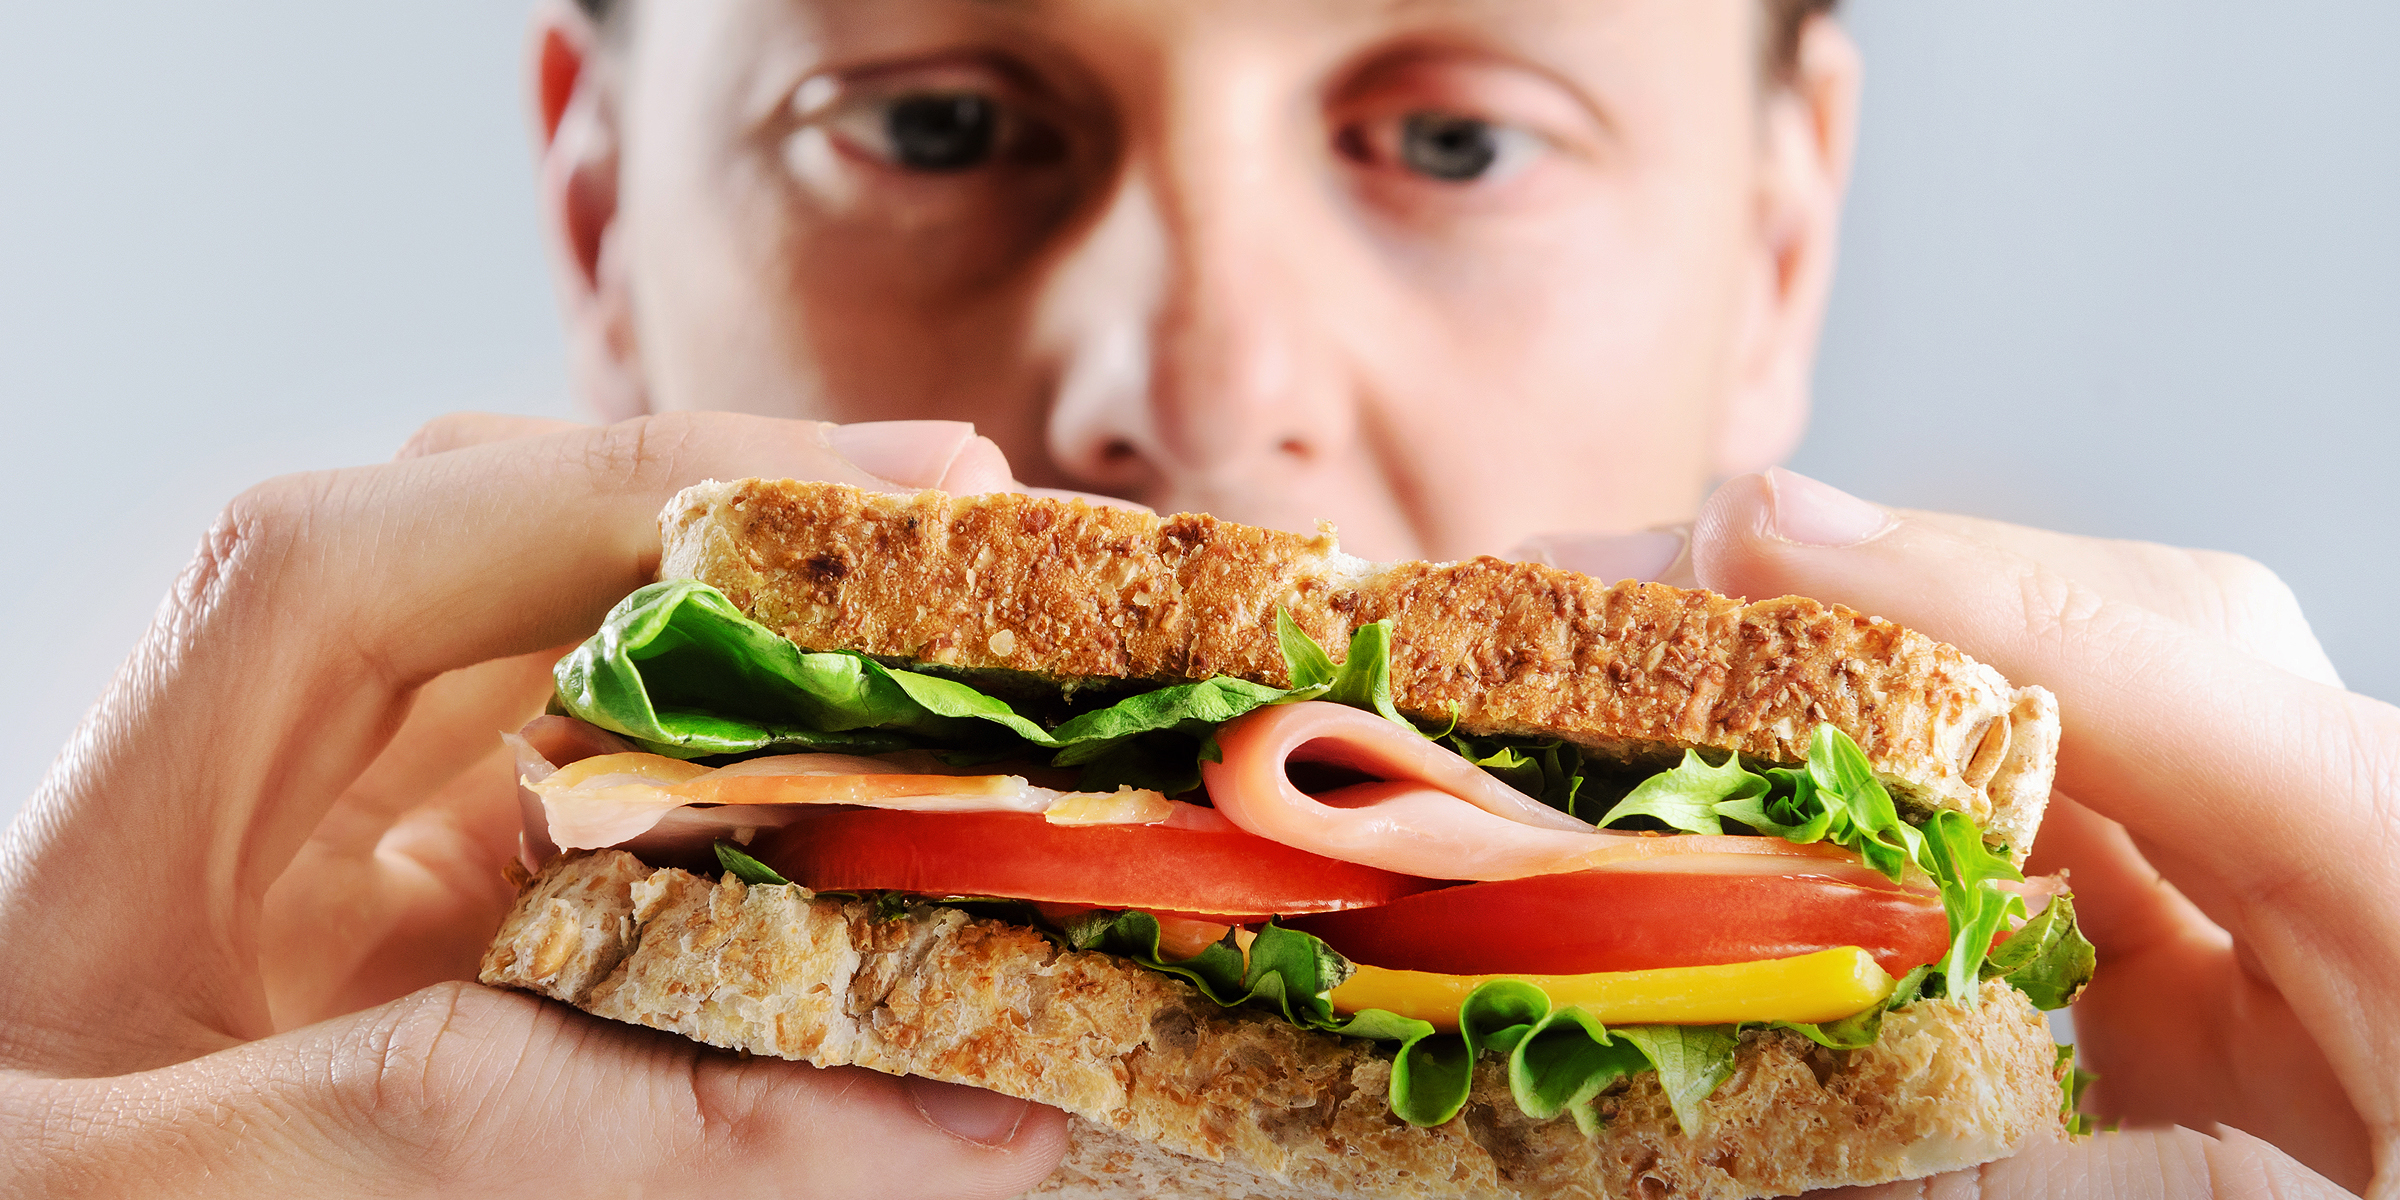 Un homme regarde un sandwich | Source : Shutterstock